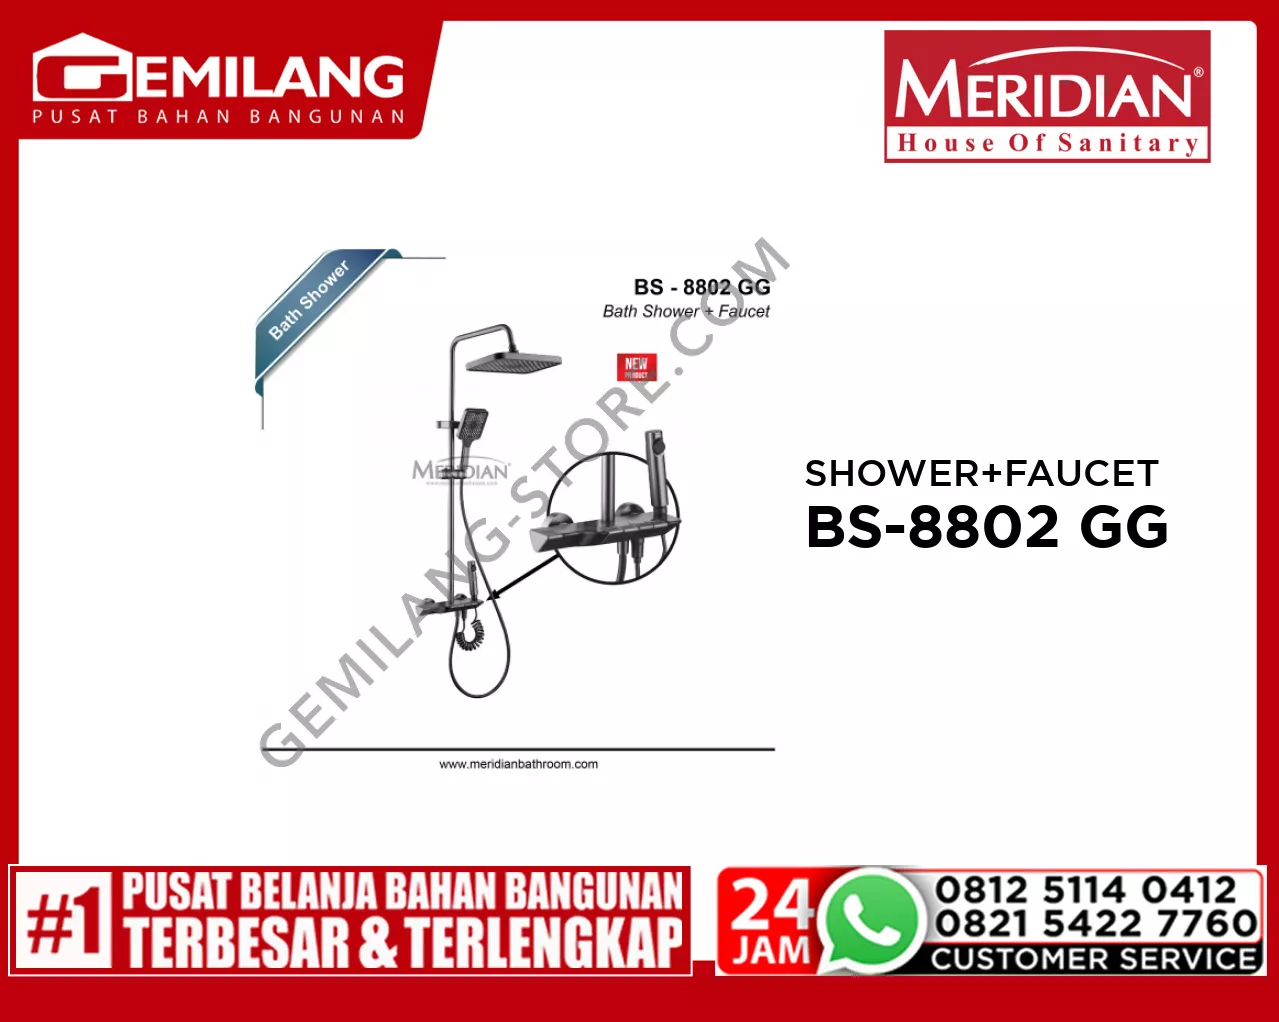 MERIDIAN BATH SHOWER + FAUCET BS-8802 GG